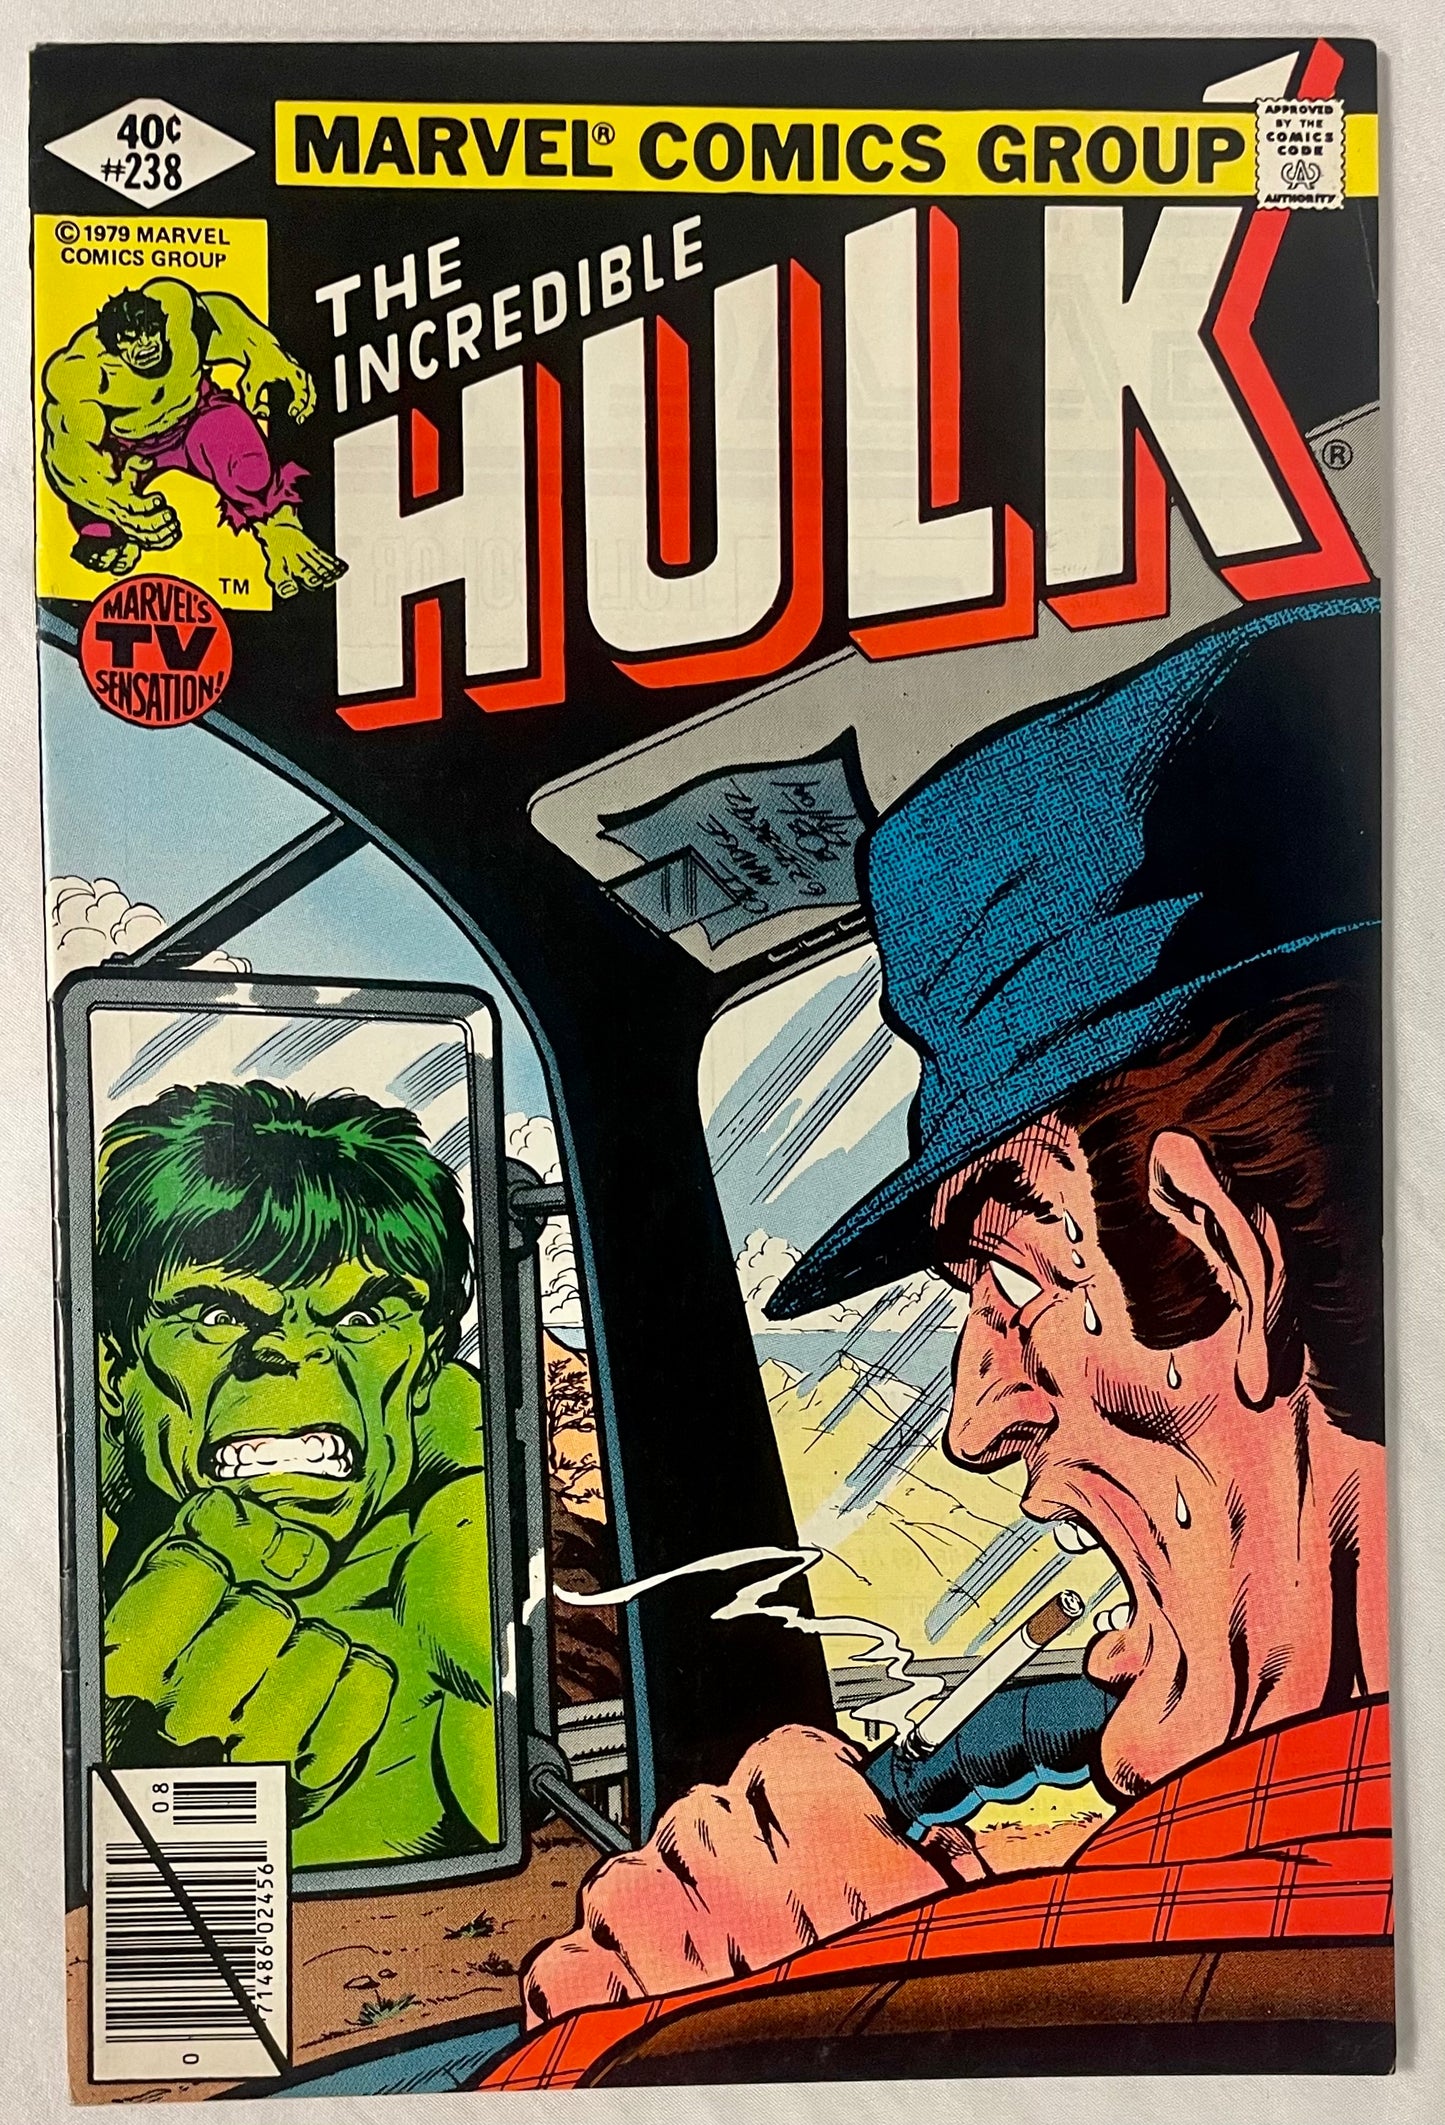 Marvel Comics The Incredible Hulk #238